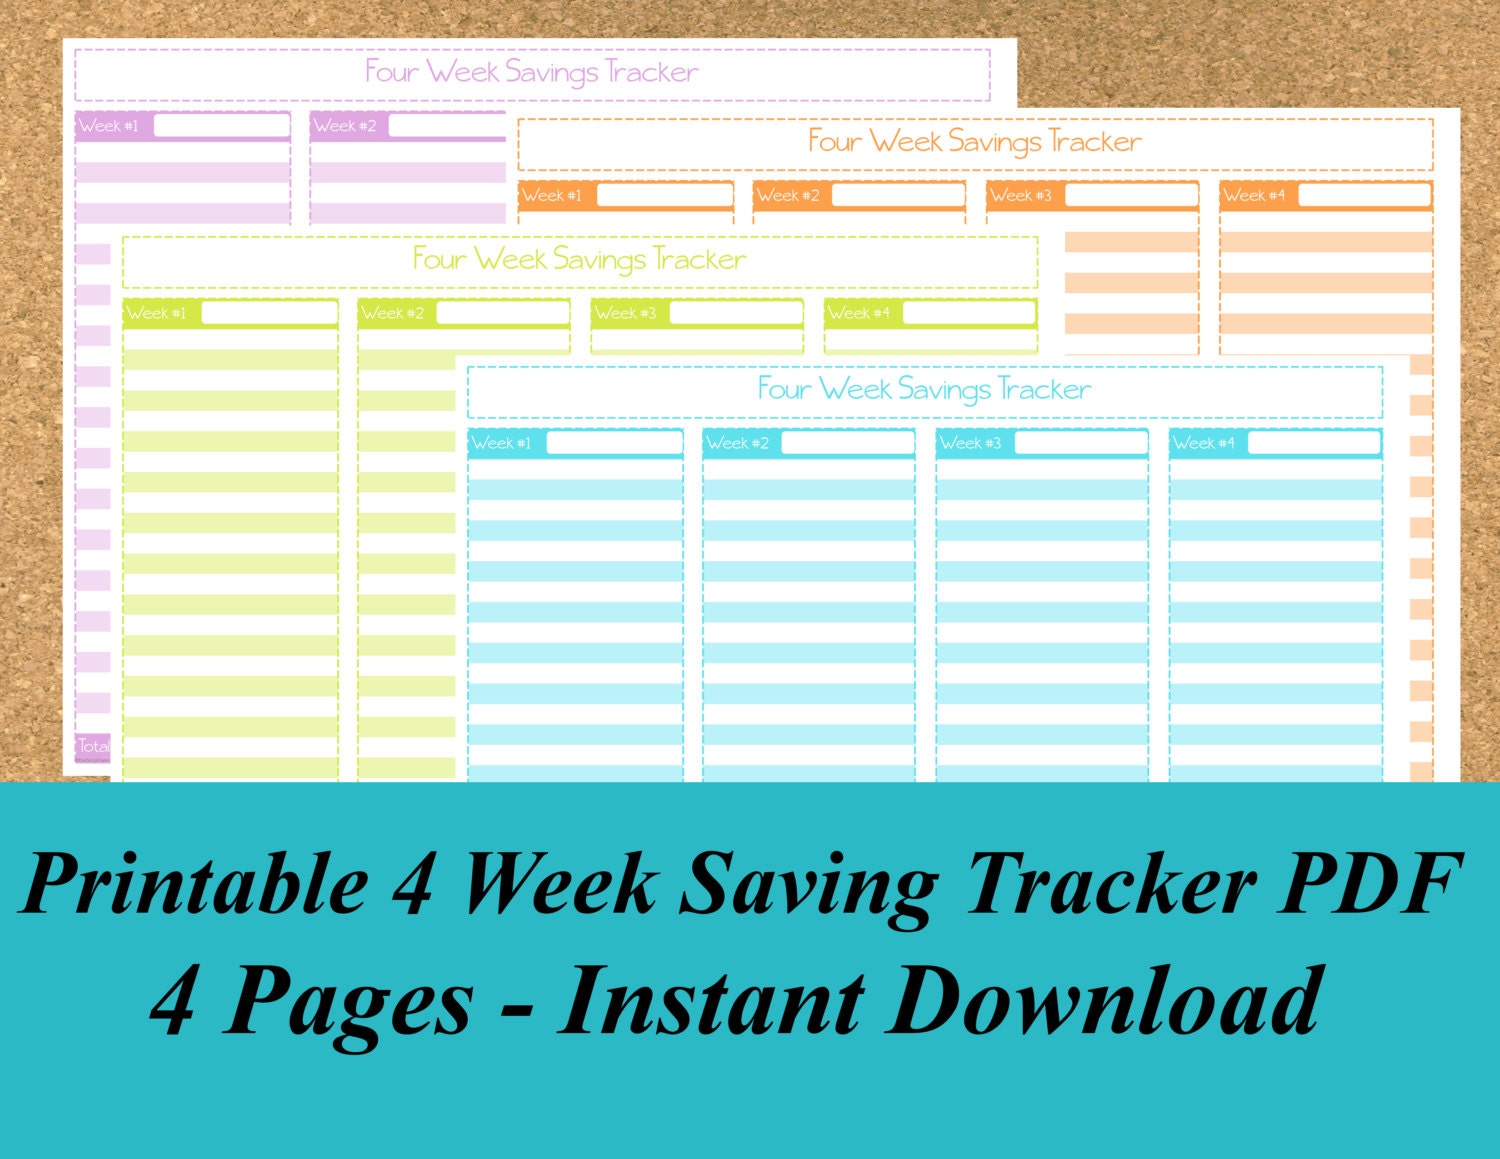 INSTANT DOWNLOAD Printable 4 Week Savings Tracker PDF 4 Pages